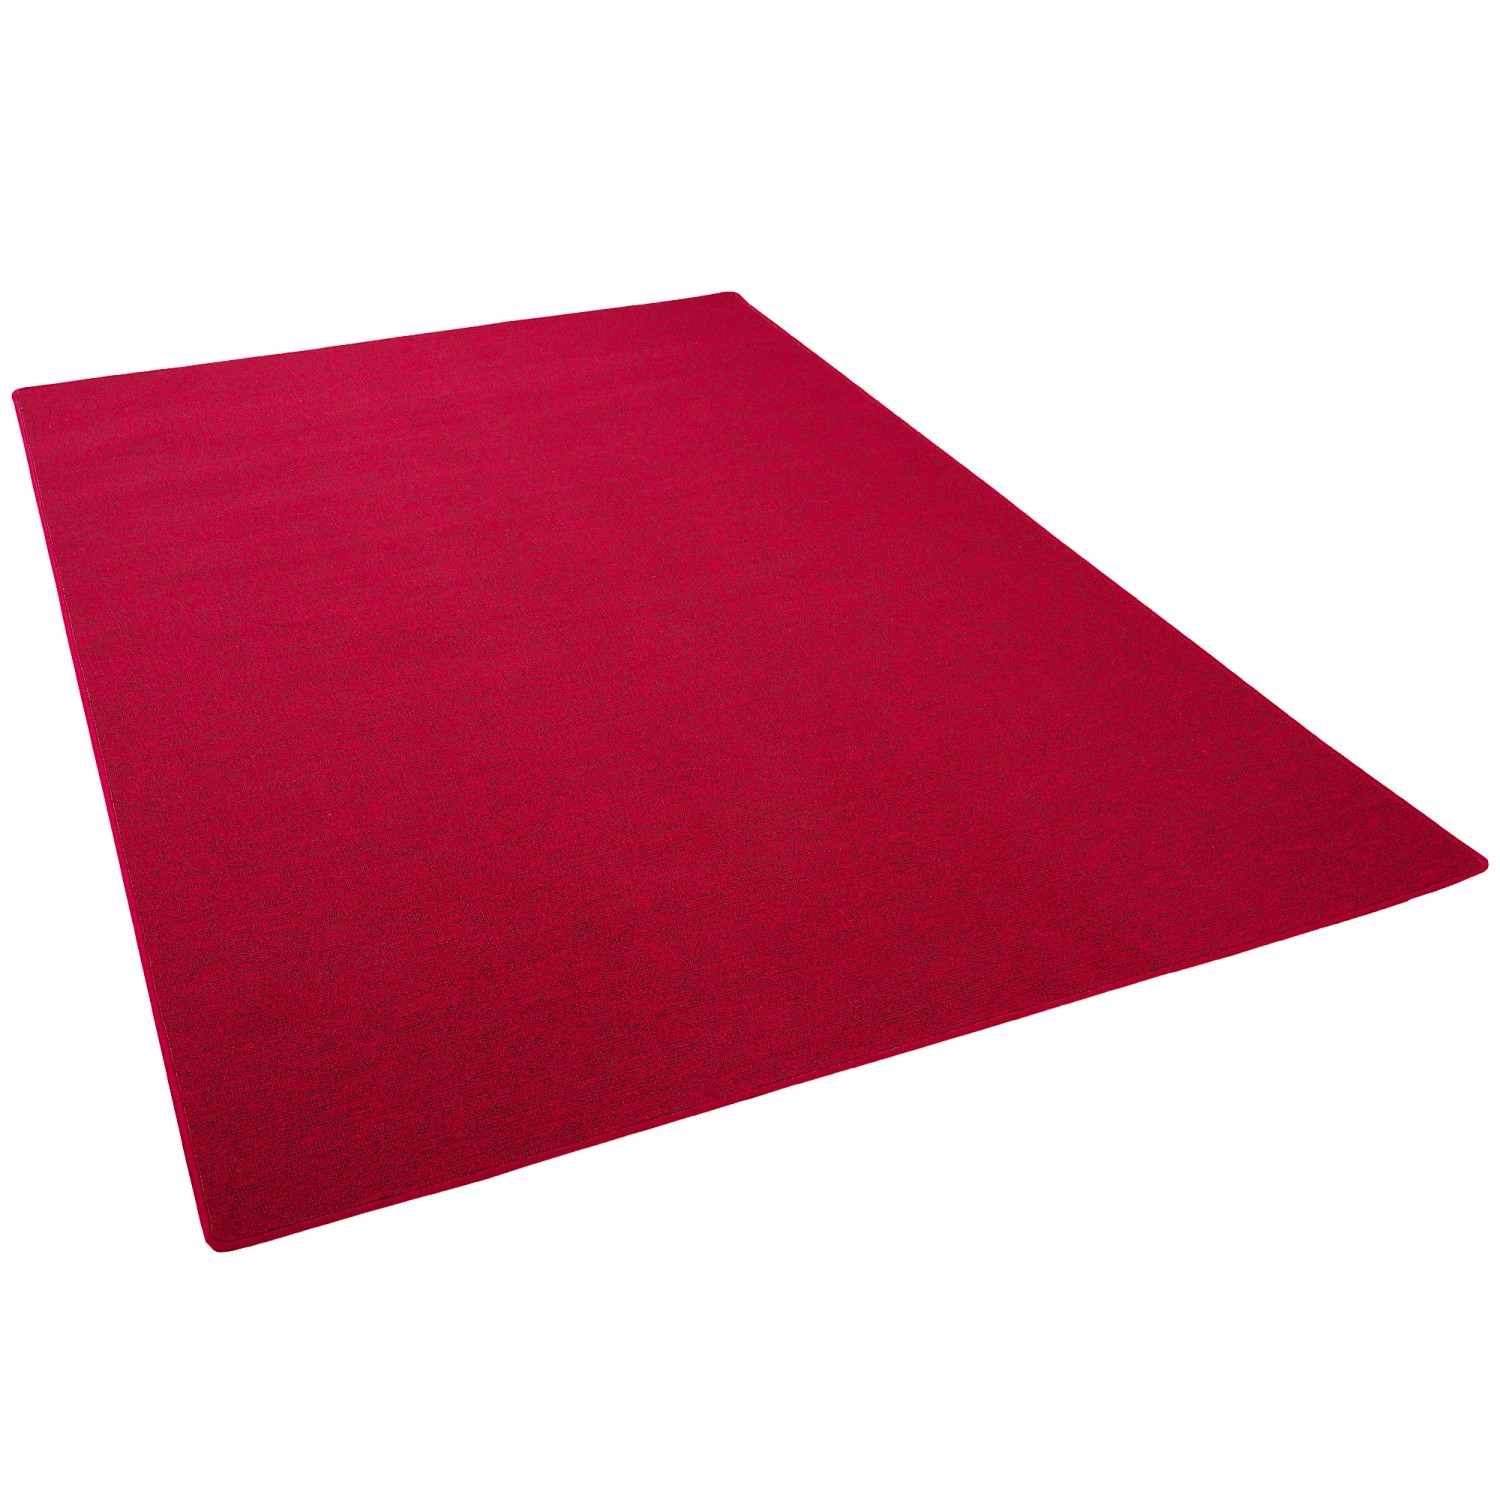 Snapstyle Feinschlingen Velour Teppich Strong Rot 200x250cm günstig online kaufen